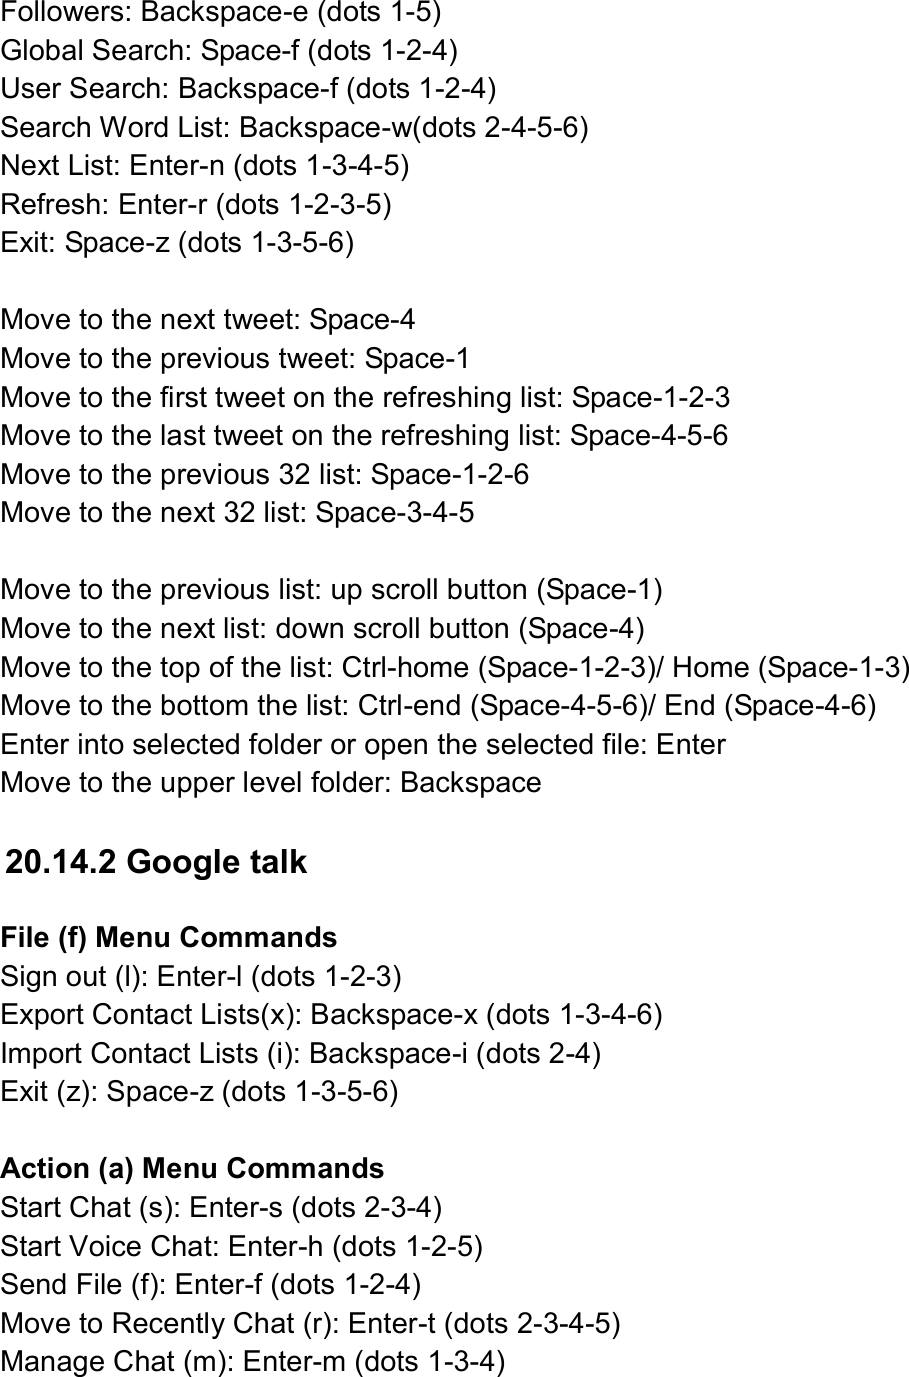  Followers: Backspace-e (dots 1-5) Global Search: Space-f (dots 1-2-4) User Search: Backspace-f (dots 1-2-4) Search Word List: Backspace-w(dots 2-4-5-6)   Next List: Enter-n (dots 1-3-4-5) Refresh: Enter-r (dots 1-2-3-5) Exit: Space-z (dots 1-3-5-6)  Move to the next tweet: Space-4   Move to the previous tweet: Space-1 Move to the first tweet on the refreshing list: Space-1-2-3 Move to the last tweet on the refreshing list: Space-4-5-6 Move to the previous 32 list: Space-1-2-6 Move to the next 32 list: Space-3-4-5  Move to the previous list: up scroll button (Space-1) Move to the next list: down scroll button (Space-4) Move to the top of the list: Ctrl-home (Space-1-2-3)/ Home (Space-1-3) Move to the bottom the list: Ctrl-end (Space-4-5-6)/ End (Space-4-6) Enter into selected folder or open the selected file: Enter Move to the upper level folder: Backspace  20.14.2 Google talk  File (f) Menu Commands Sign out (l): Enter-l (dots 1-2-3) Export Contact Lists(x): Backspace-x (dots 1-3-4-6) Import Contact Lists (i): Backspace-i (dots 2-4) Exit (z): Space-z (dots 1-3-5-6)  Action (a) Menu Commands Start Chat (s): Enter-s (dots 2-3-4) Start Voice Chat: Enter-h (dots 1-2-5) Send File (f): Enter-f (dots 1-2-4) Move to Recently Chat (r): Enter-t (dots 2-3-4-5) Manage Chat (m): Enter-m (dots 1-3-4)  